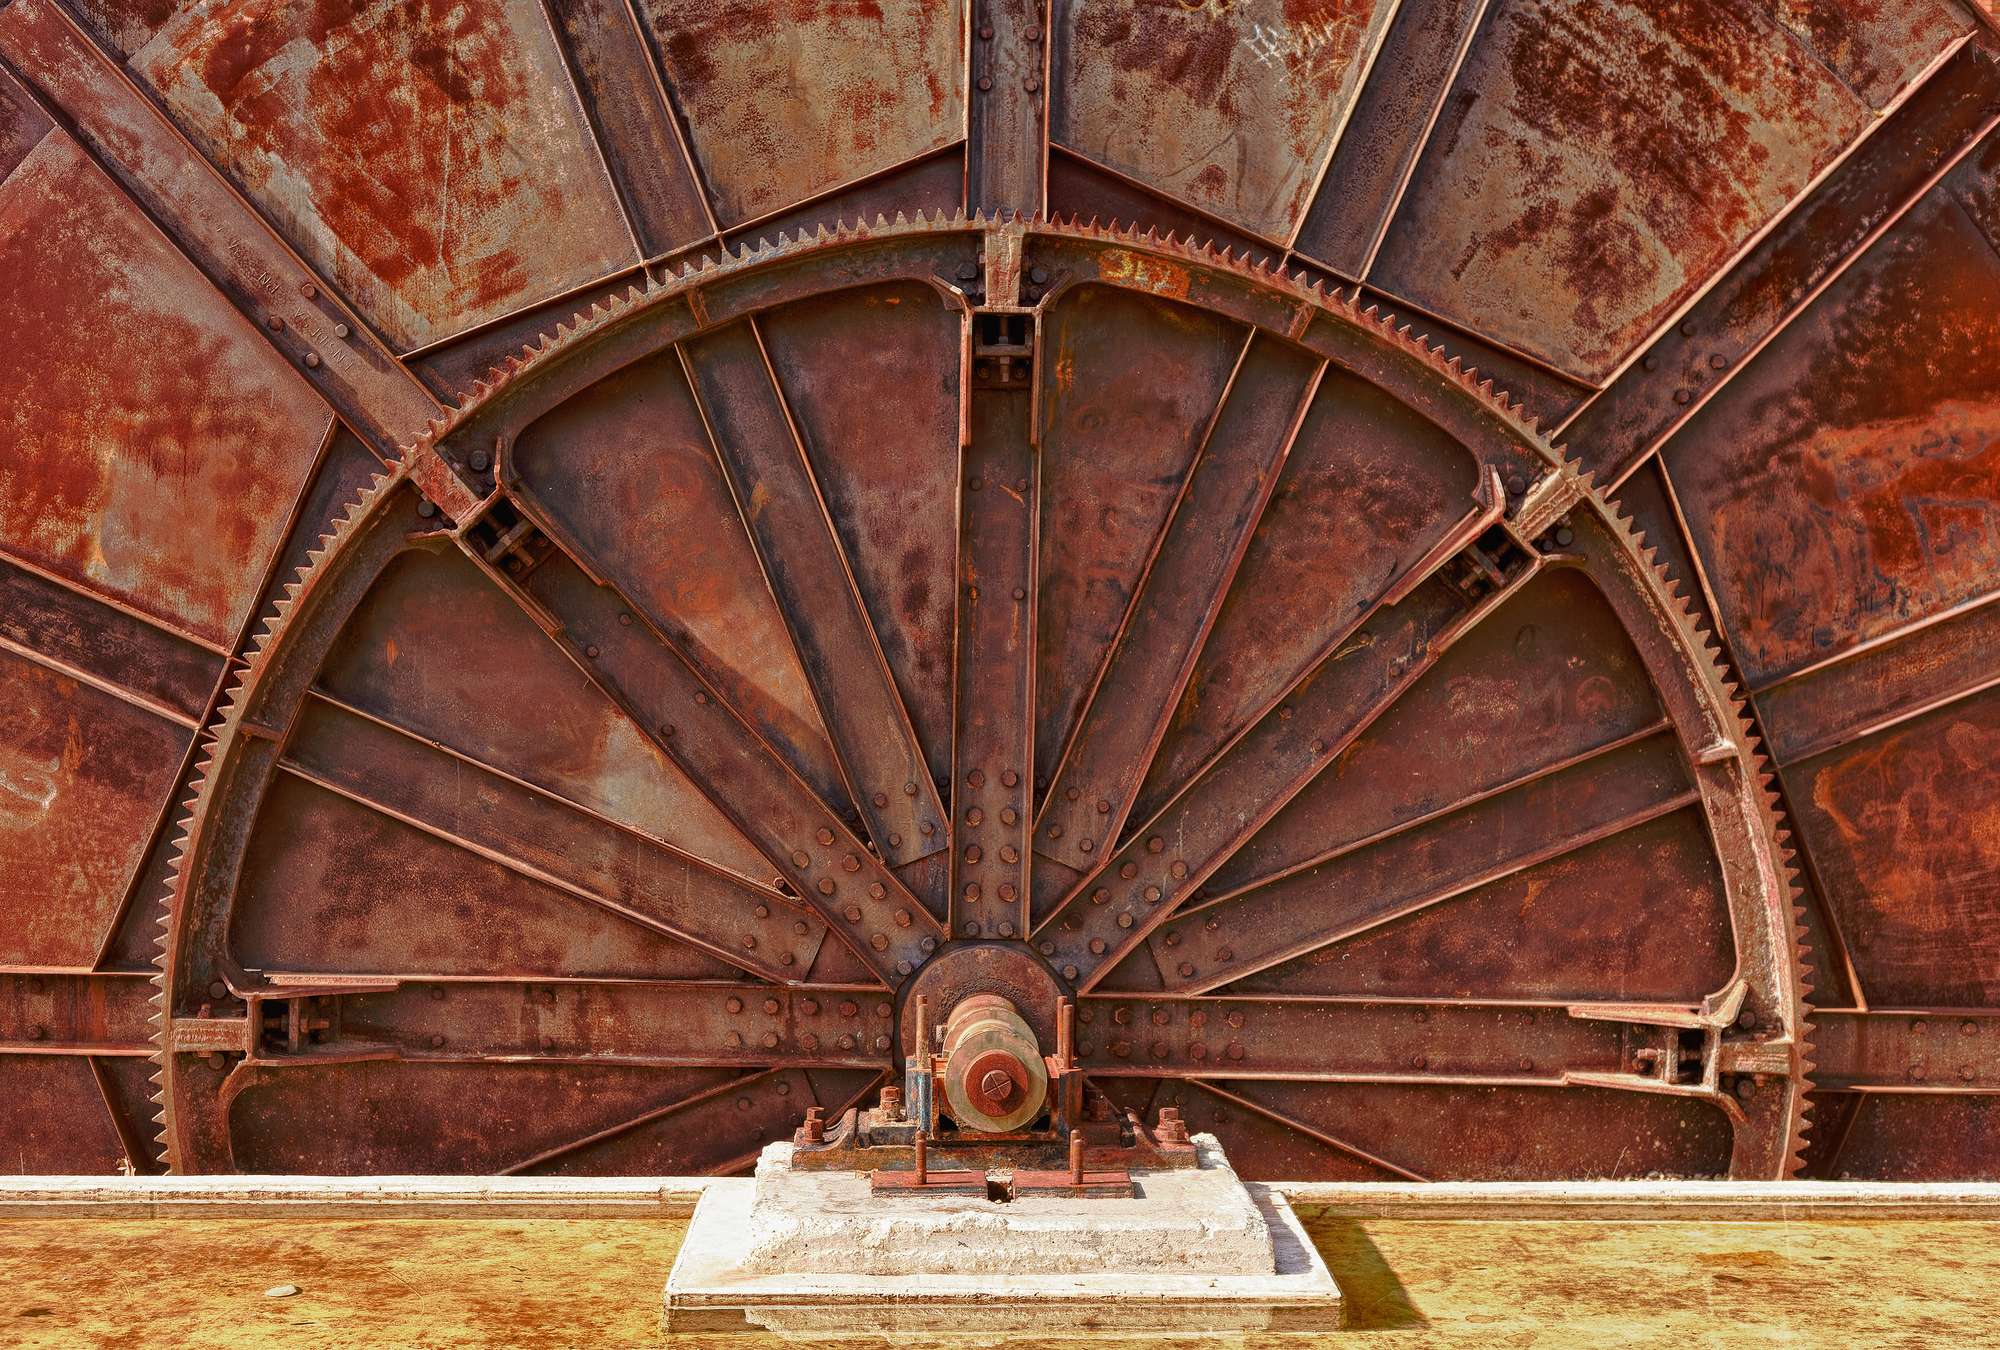             Photo wallpaper rusty iron wheel
        